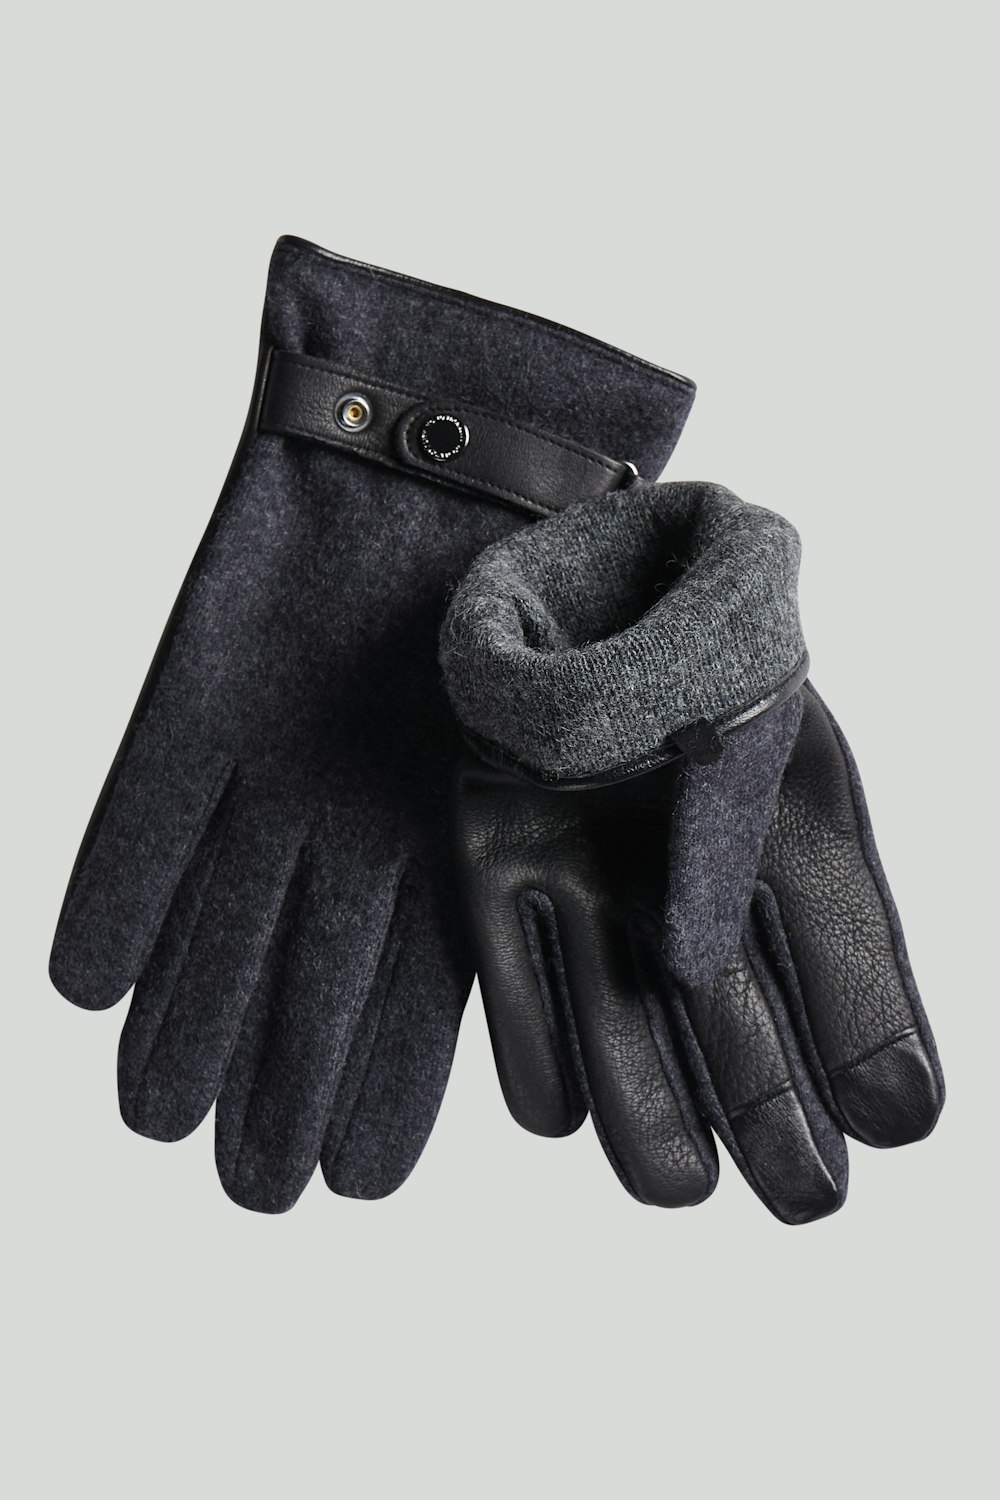 Glove Six 9077 